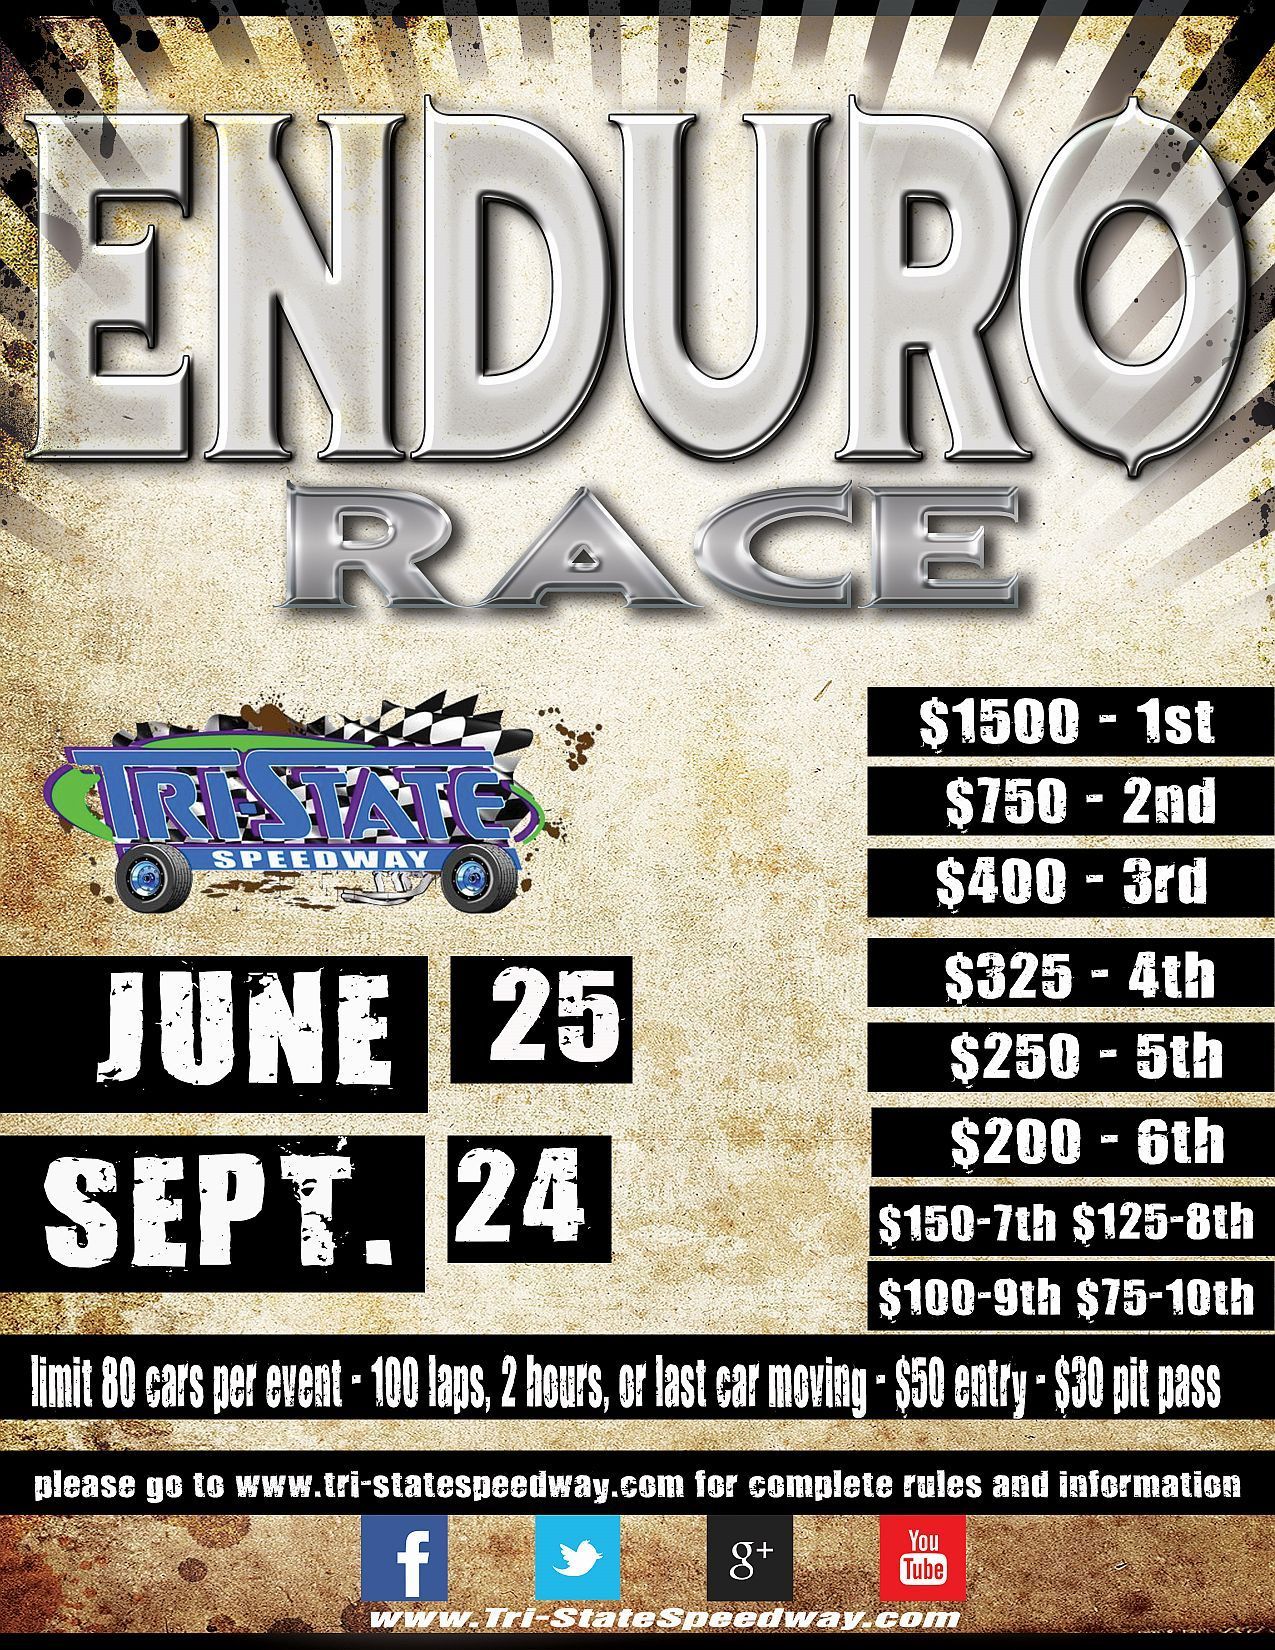 Enduro #1 - June 25th